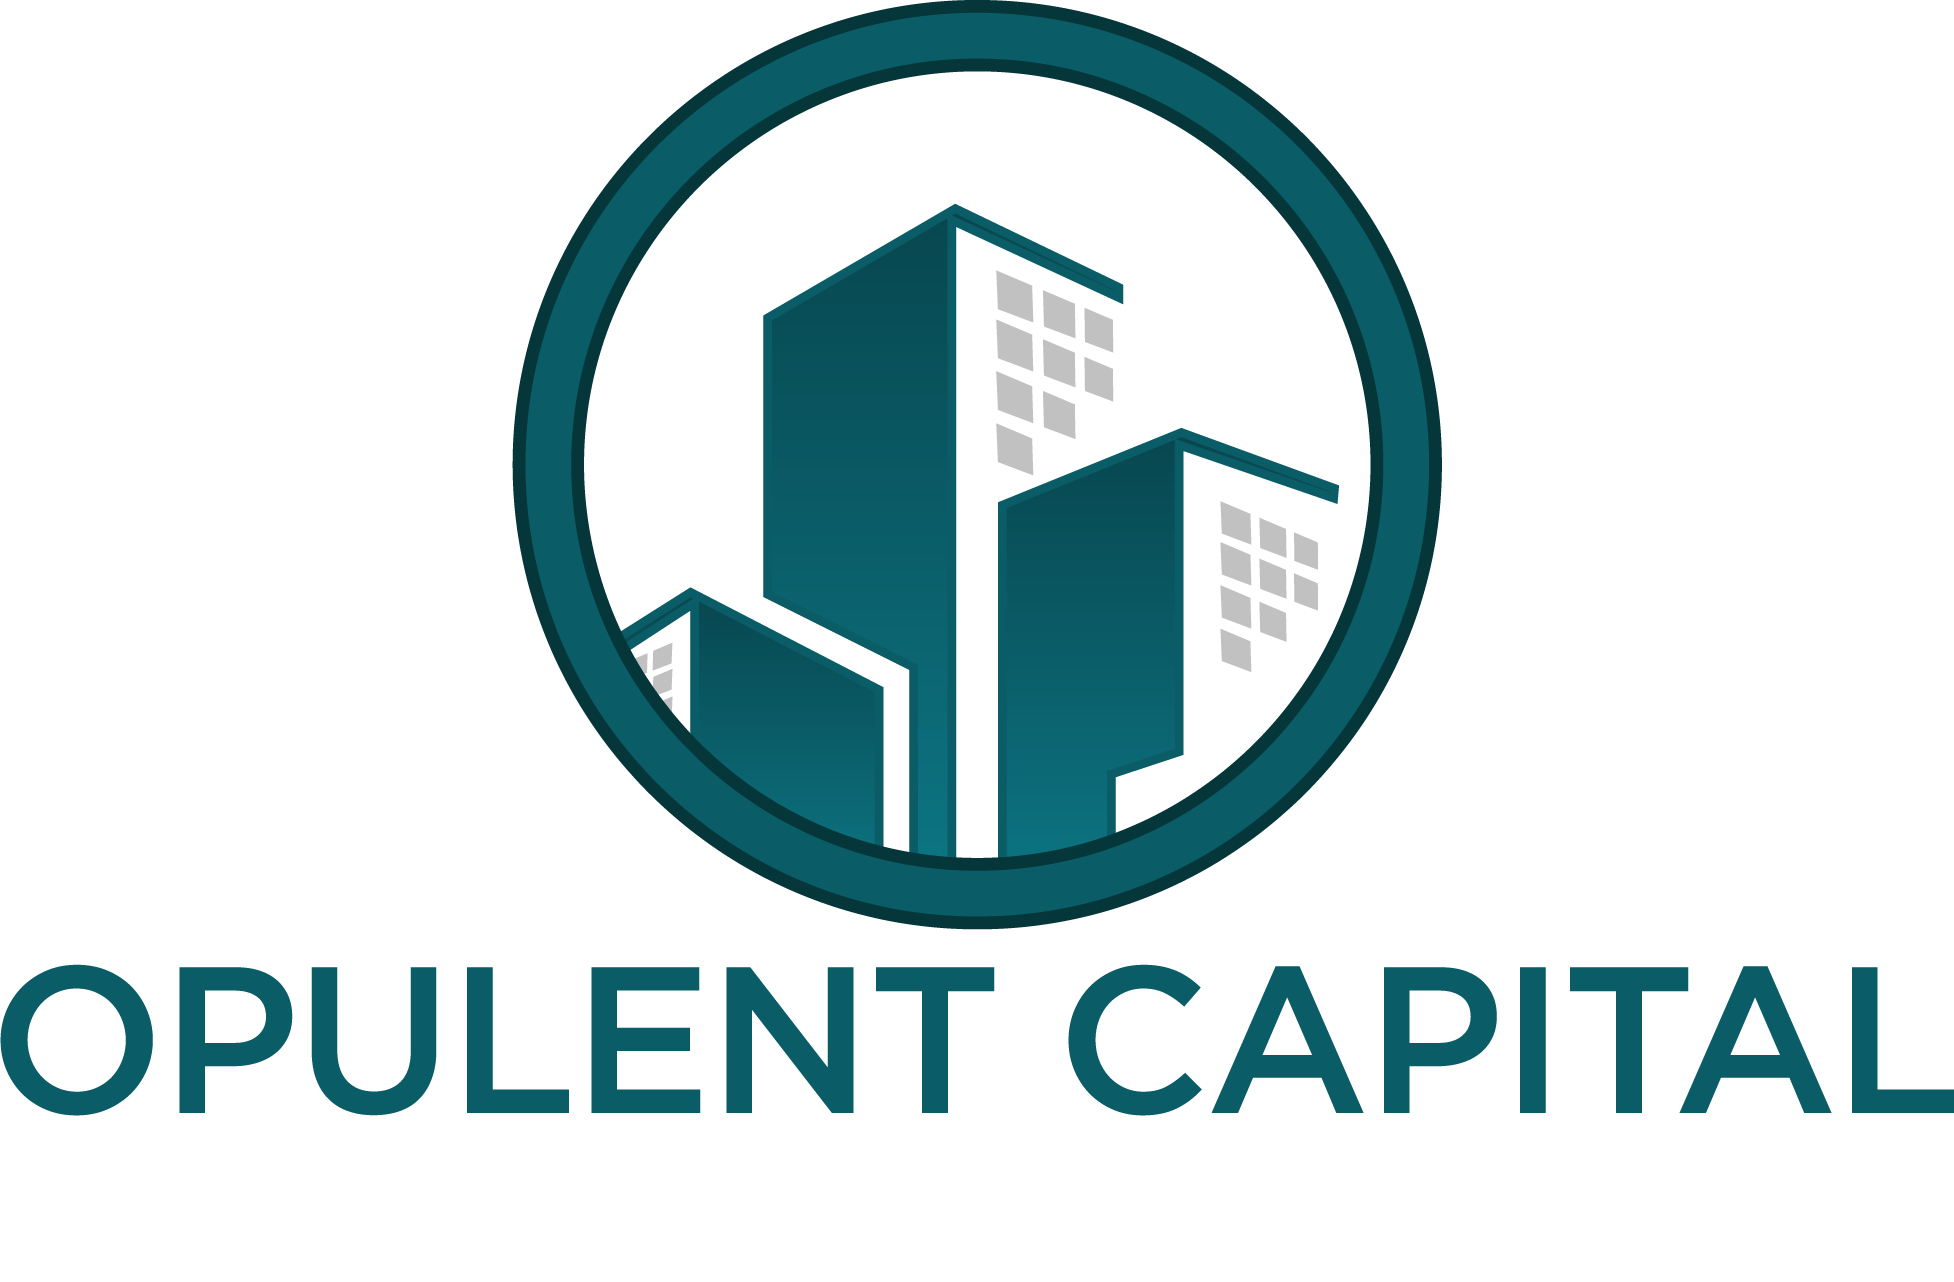 Opulent Capital Investments, Inc. logo